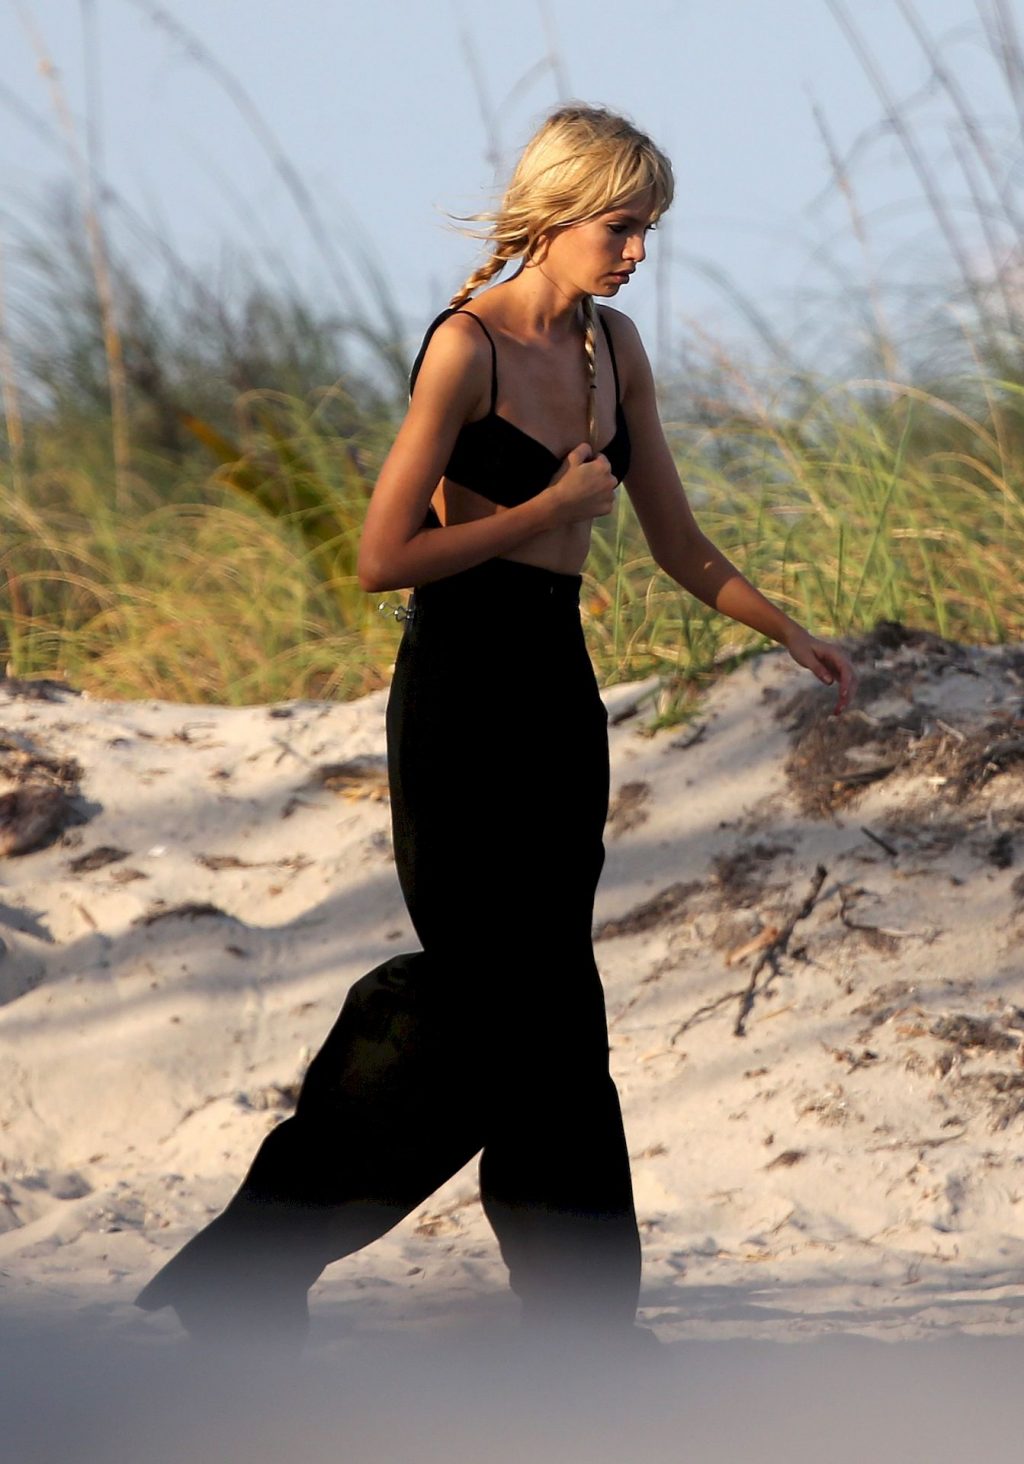 Stella Maxwell Wears a Black String Bikini During a Photoshoot in Miami (48 Photos)